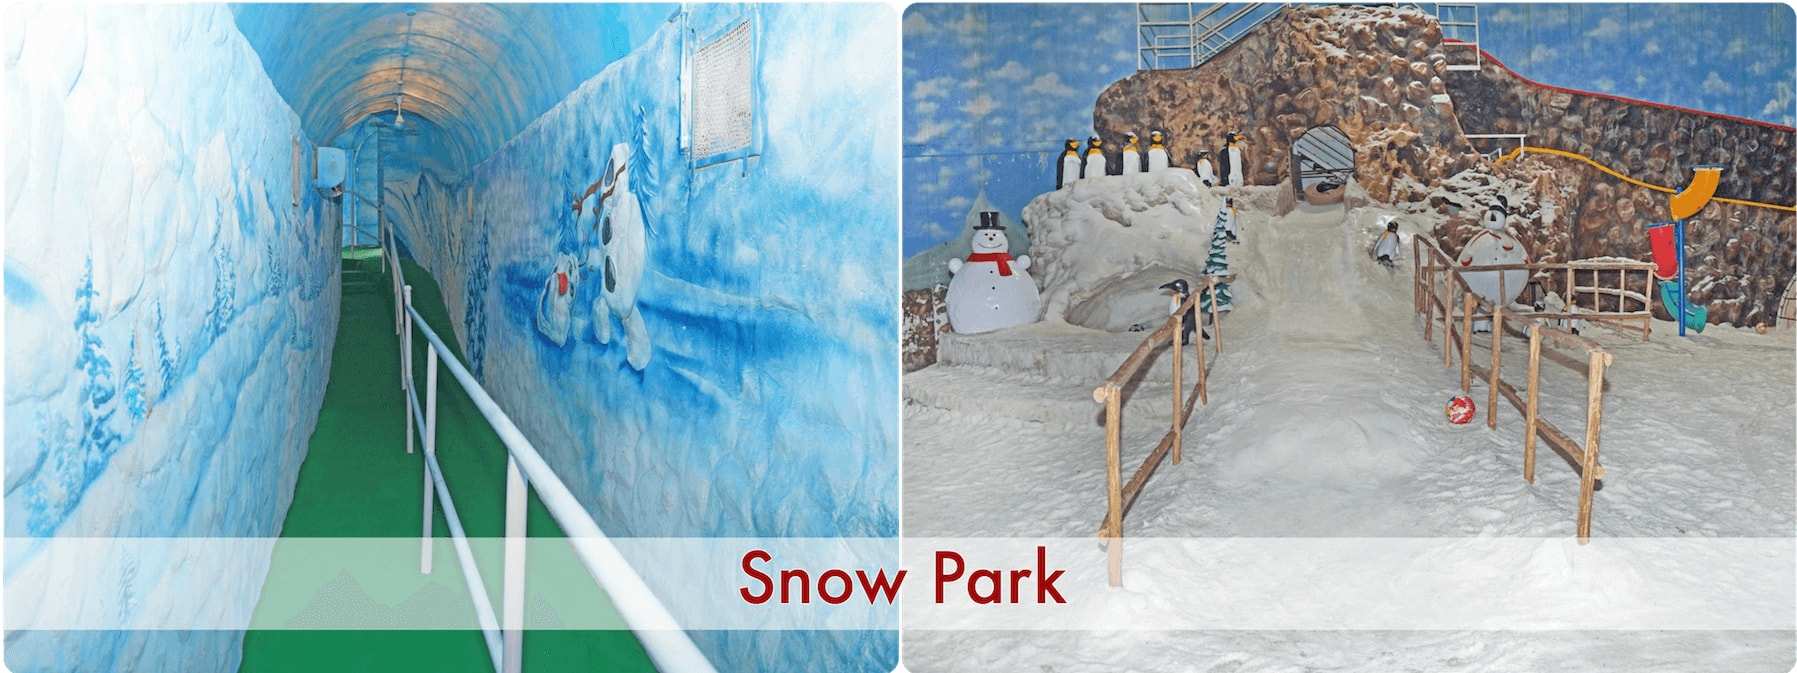 Snow-Park.jpg